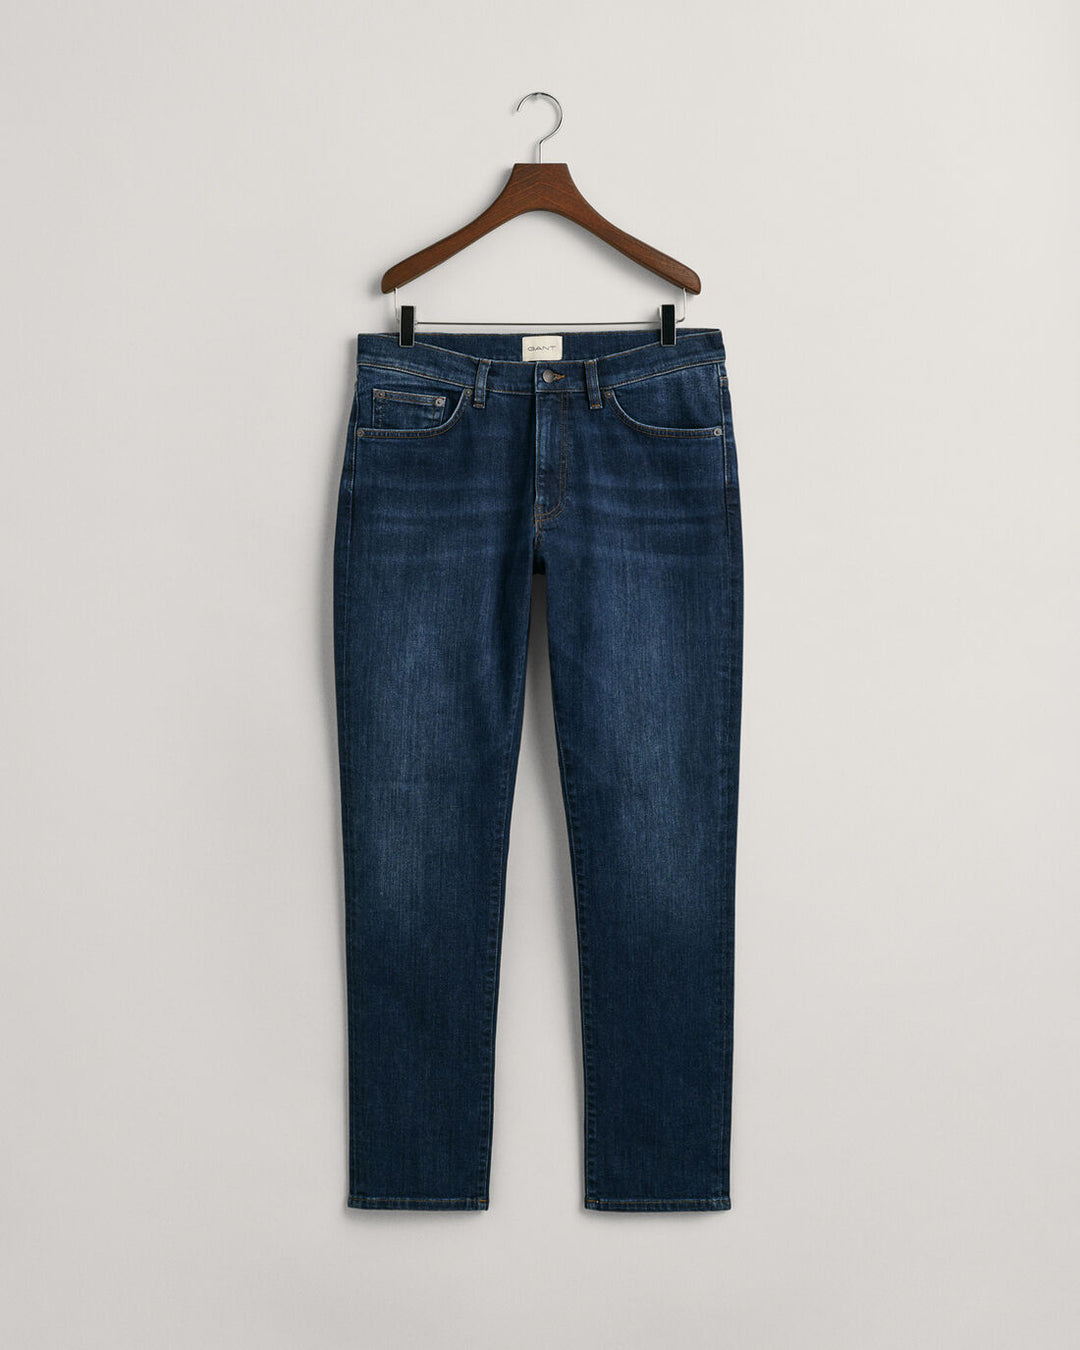 GANT Slim Gant Jeans/Traperice 1000260